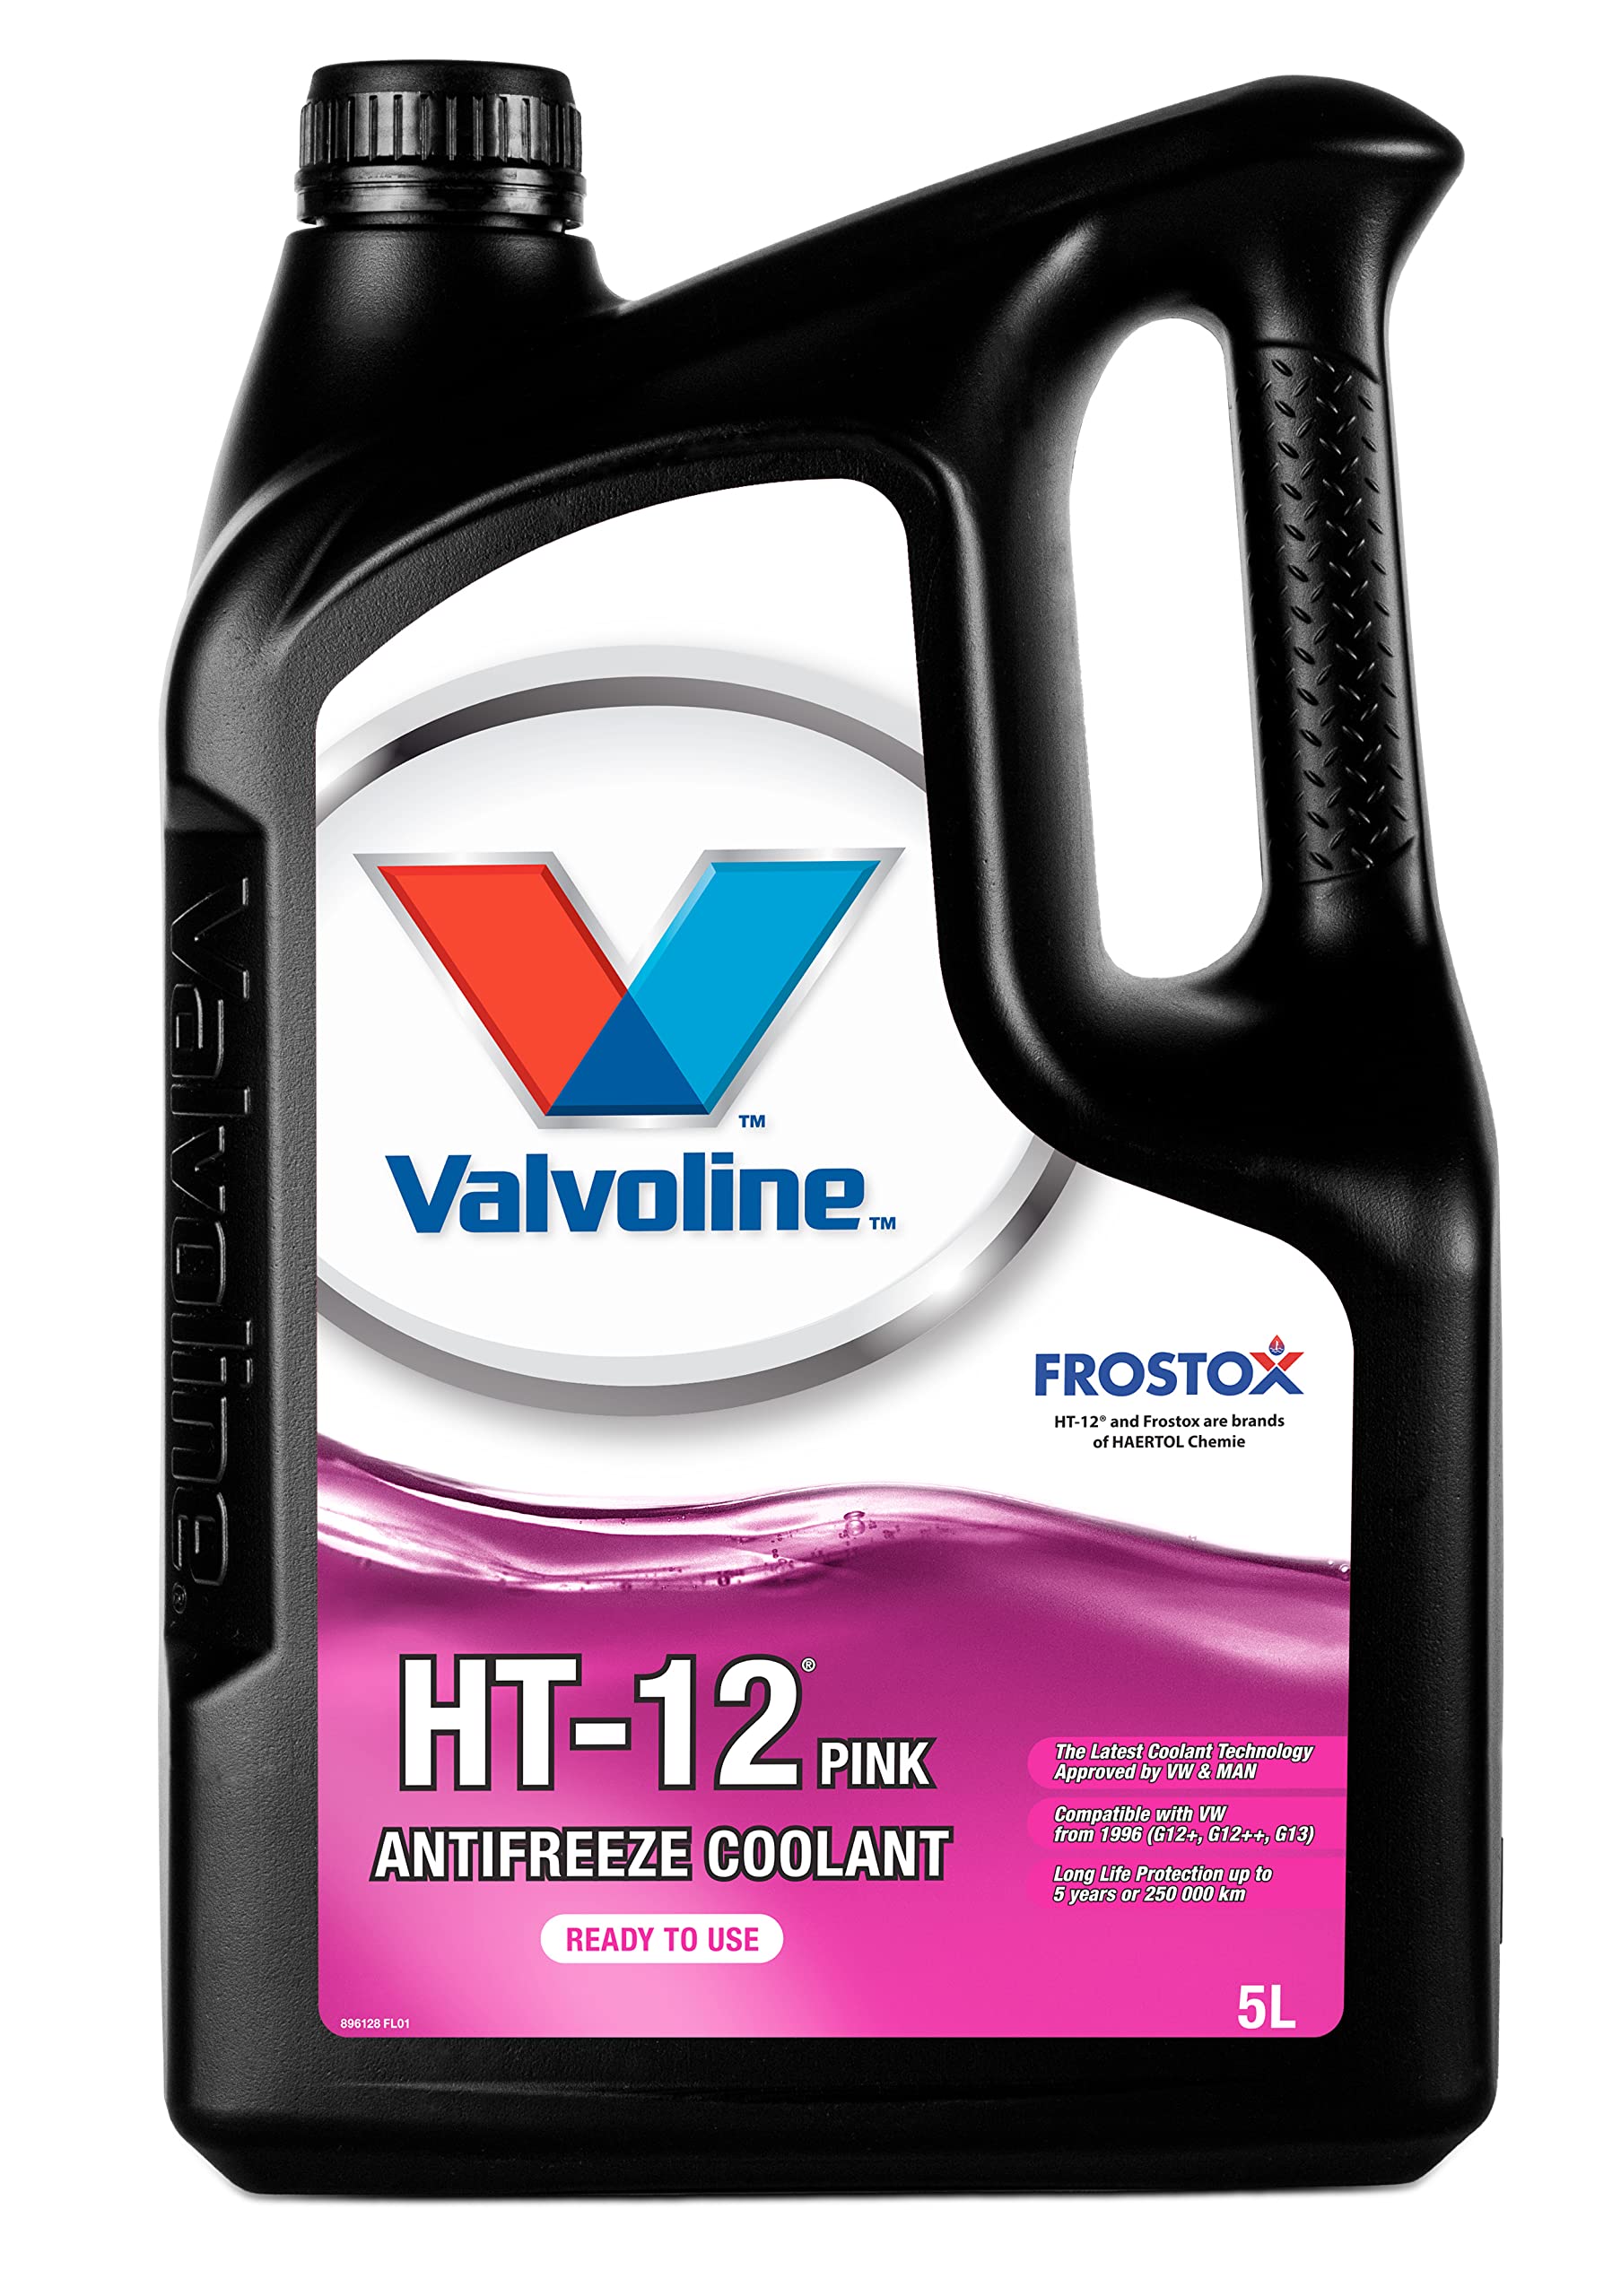 Valvoline Antifreeze Coolant HT-12 Pink Ready-to-Use, 5L